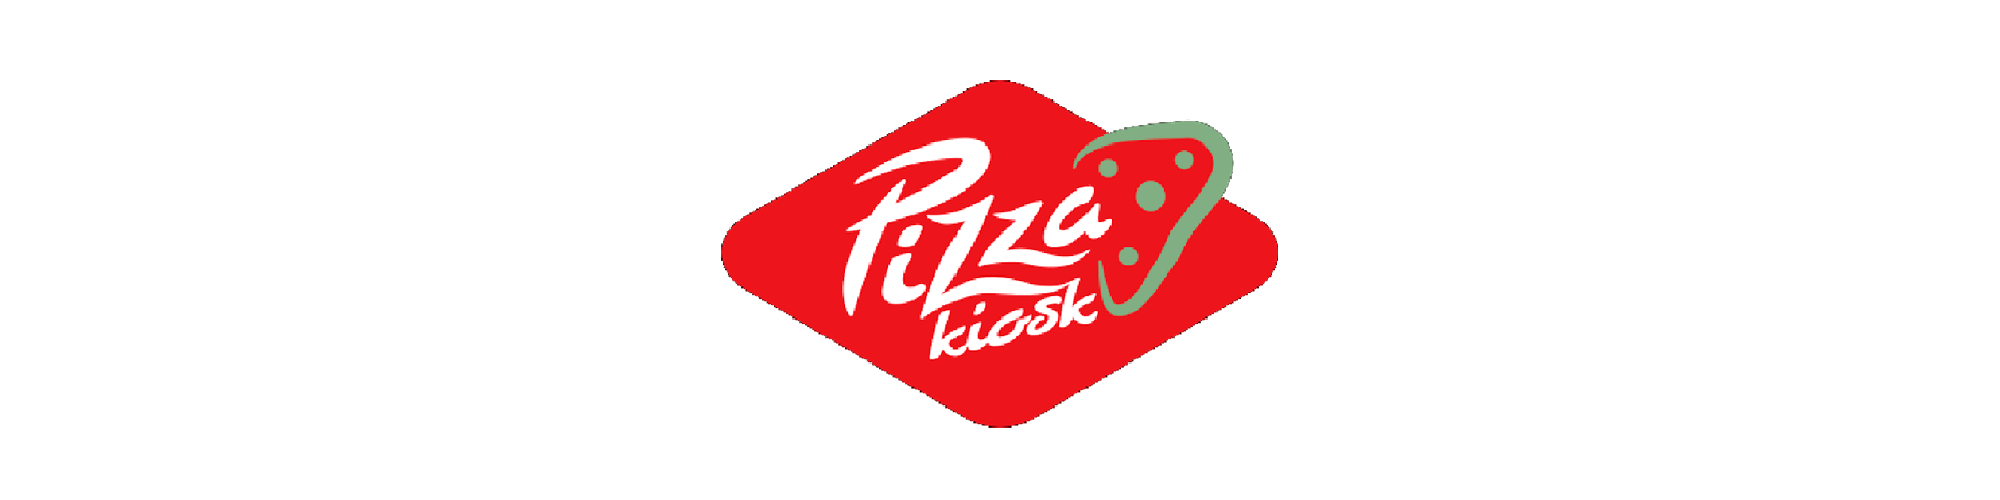 logo_pizzakiosk